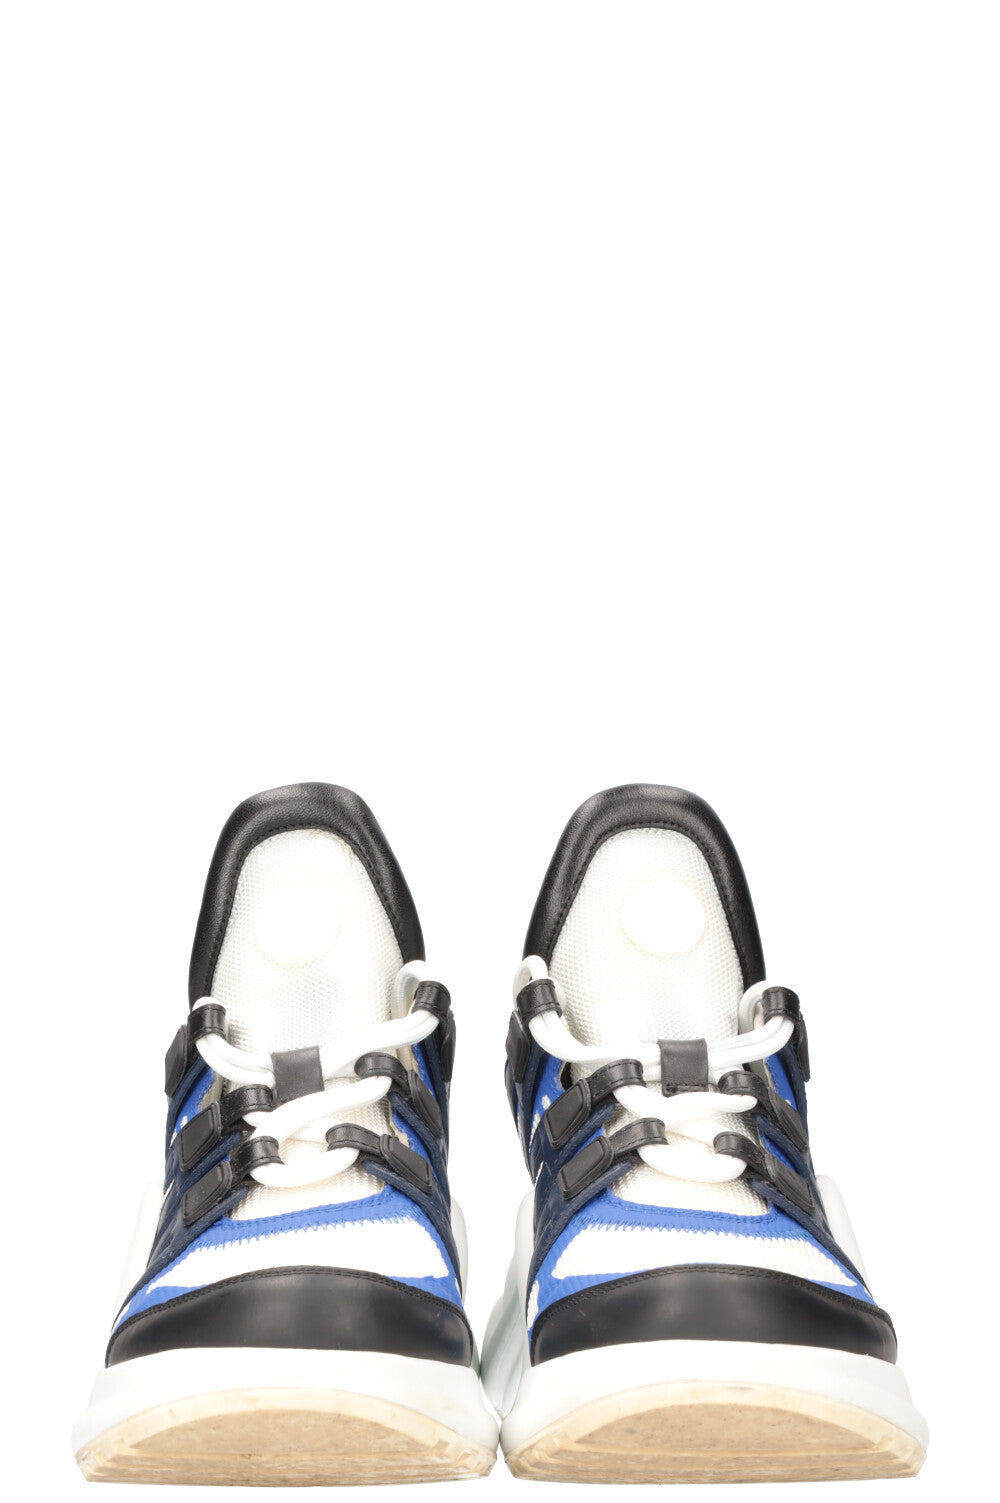 LOUIS VUITTON Archlight Sneakers Blue & White